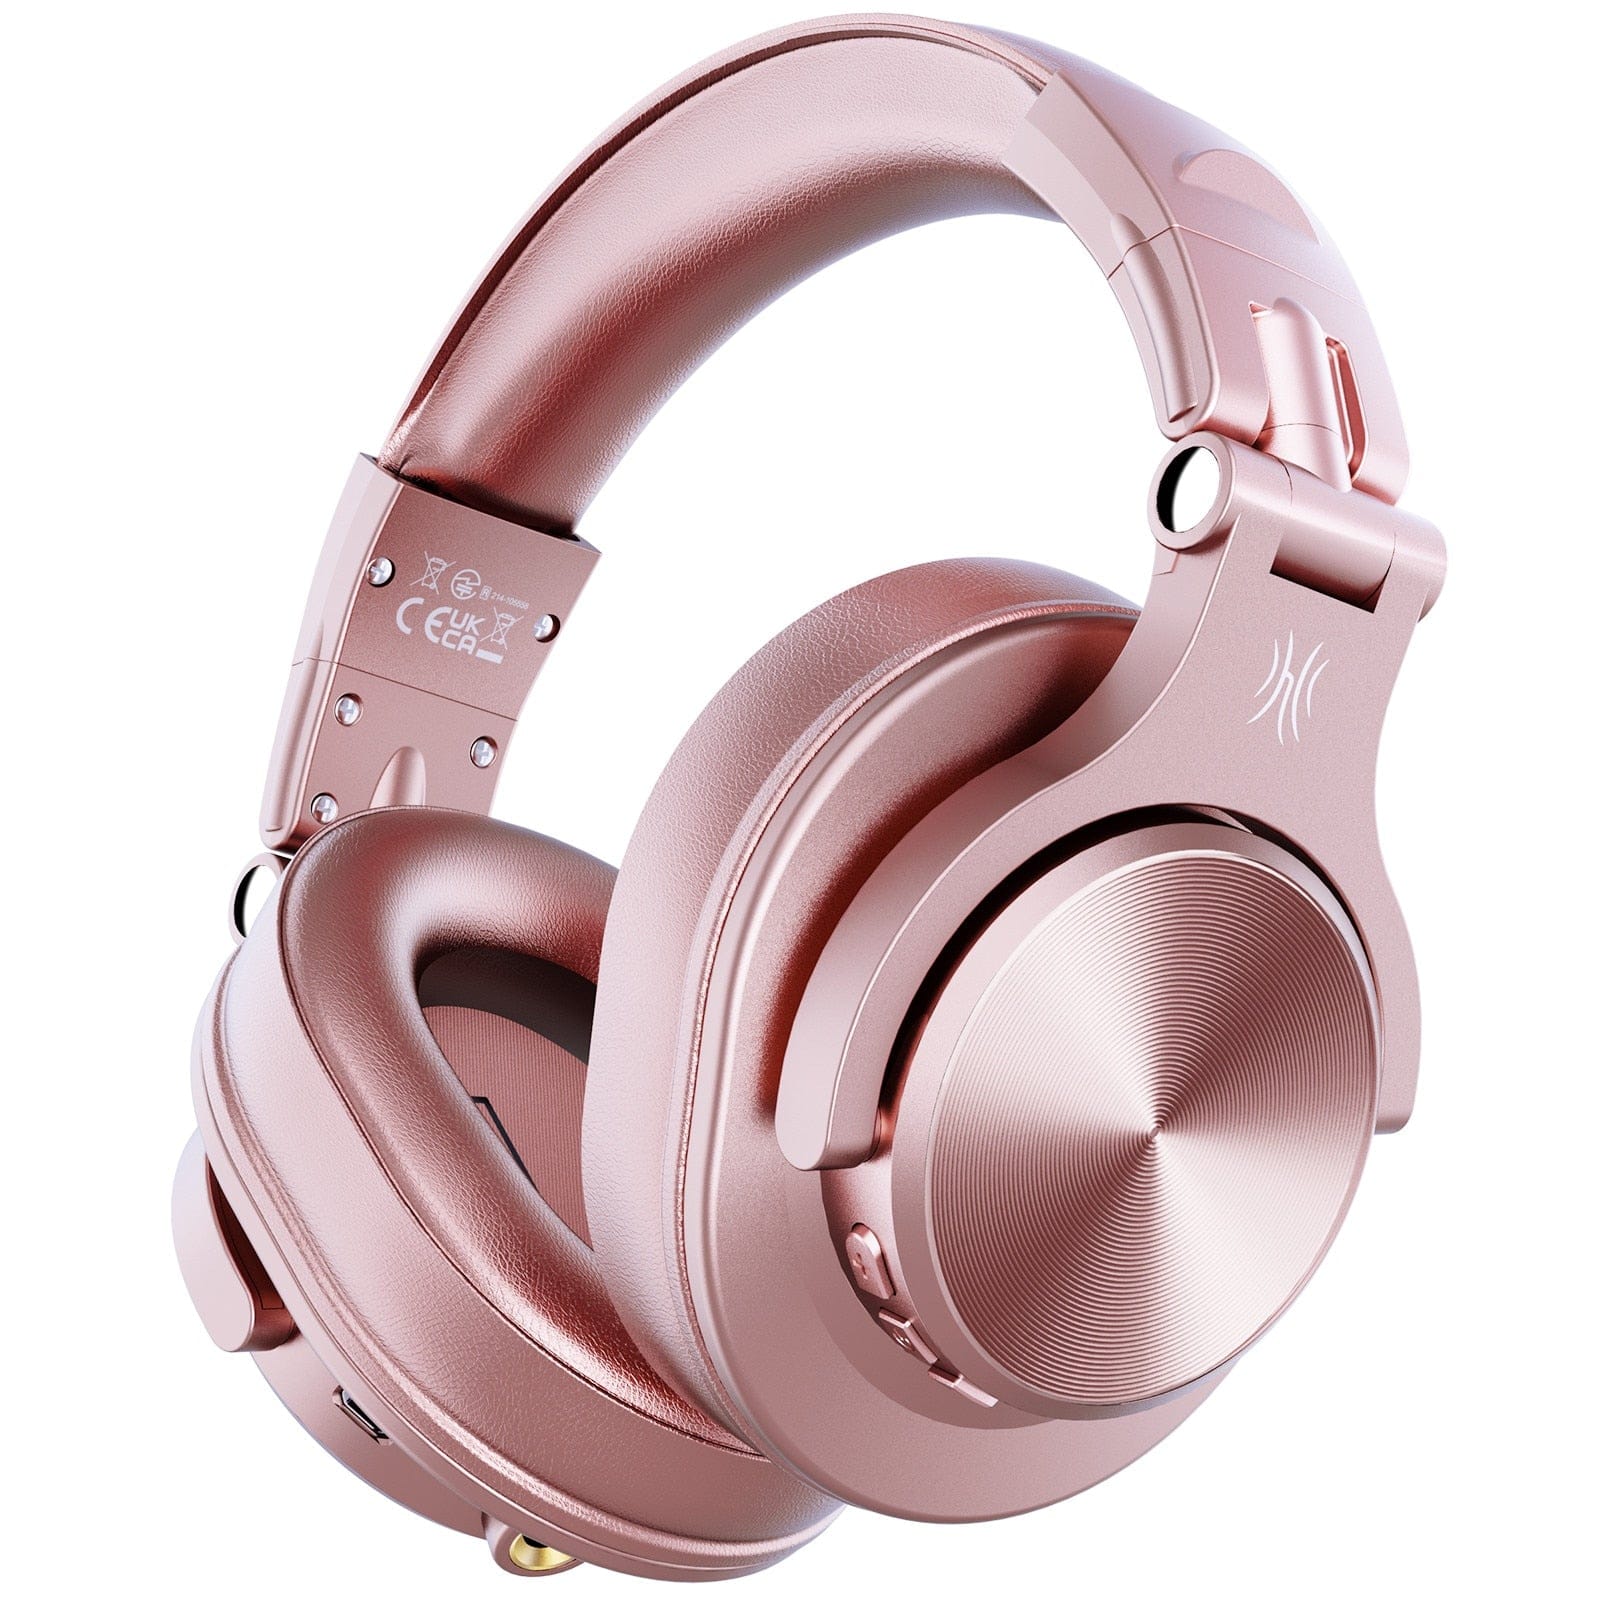 Oneodio Fusion A70 Bluetooth 5.2 Headphones